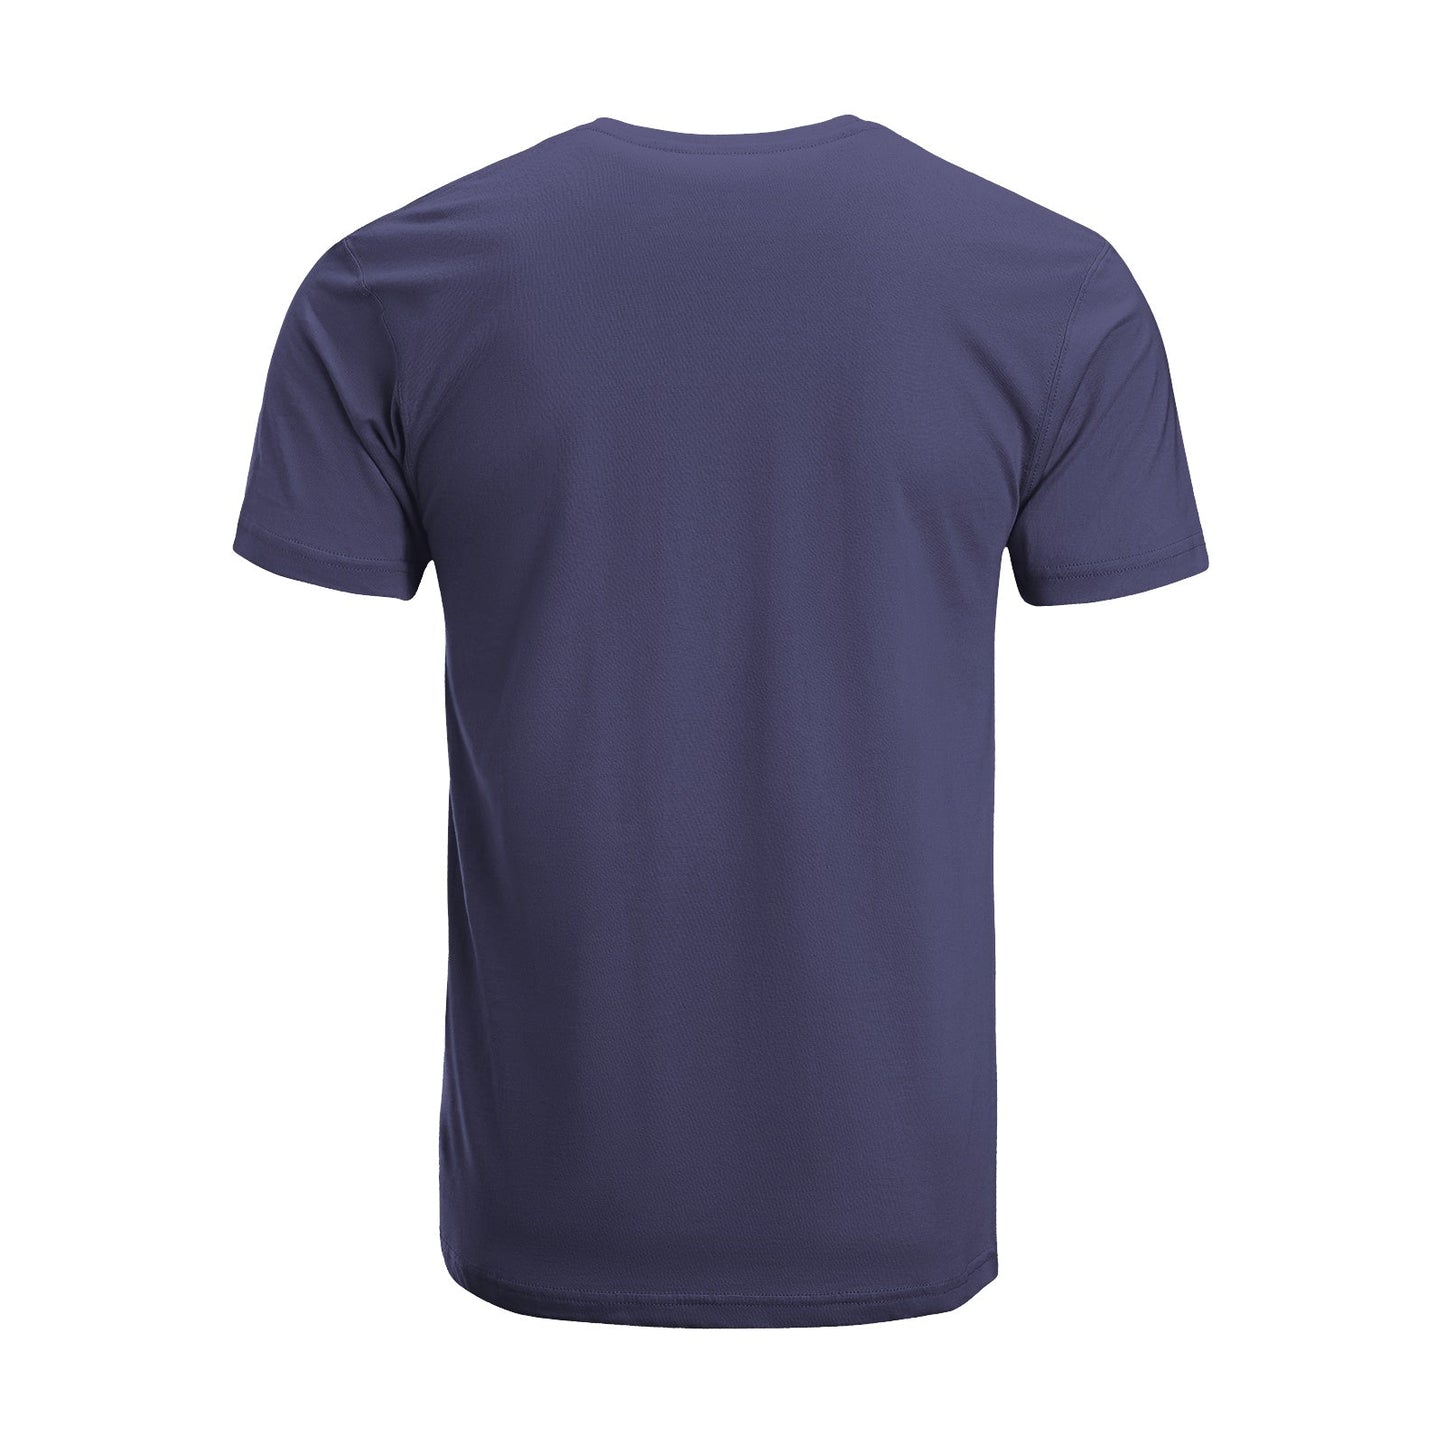 Unisex Short Sleeve Crew Neck Cotton Jersey T-Shirt MOM 26